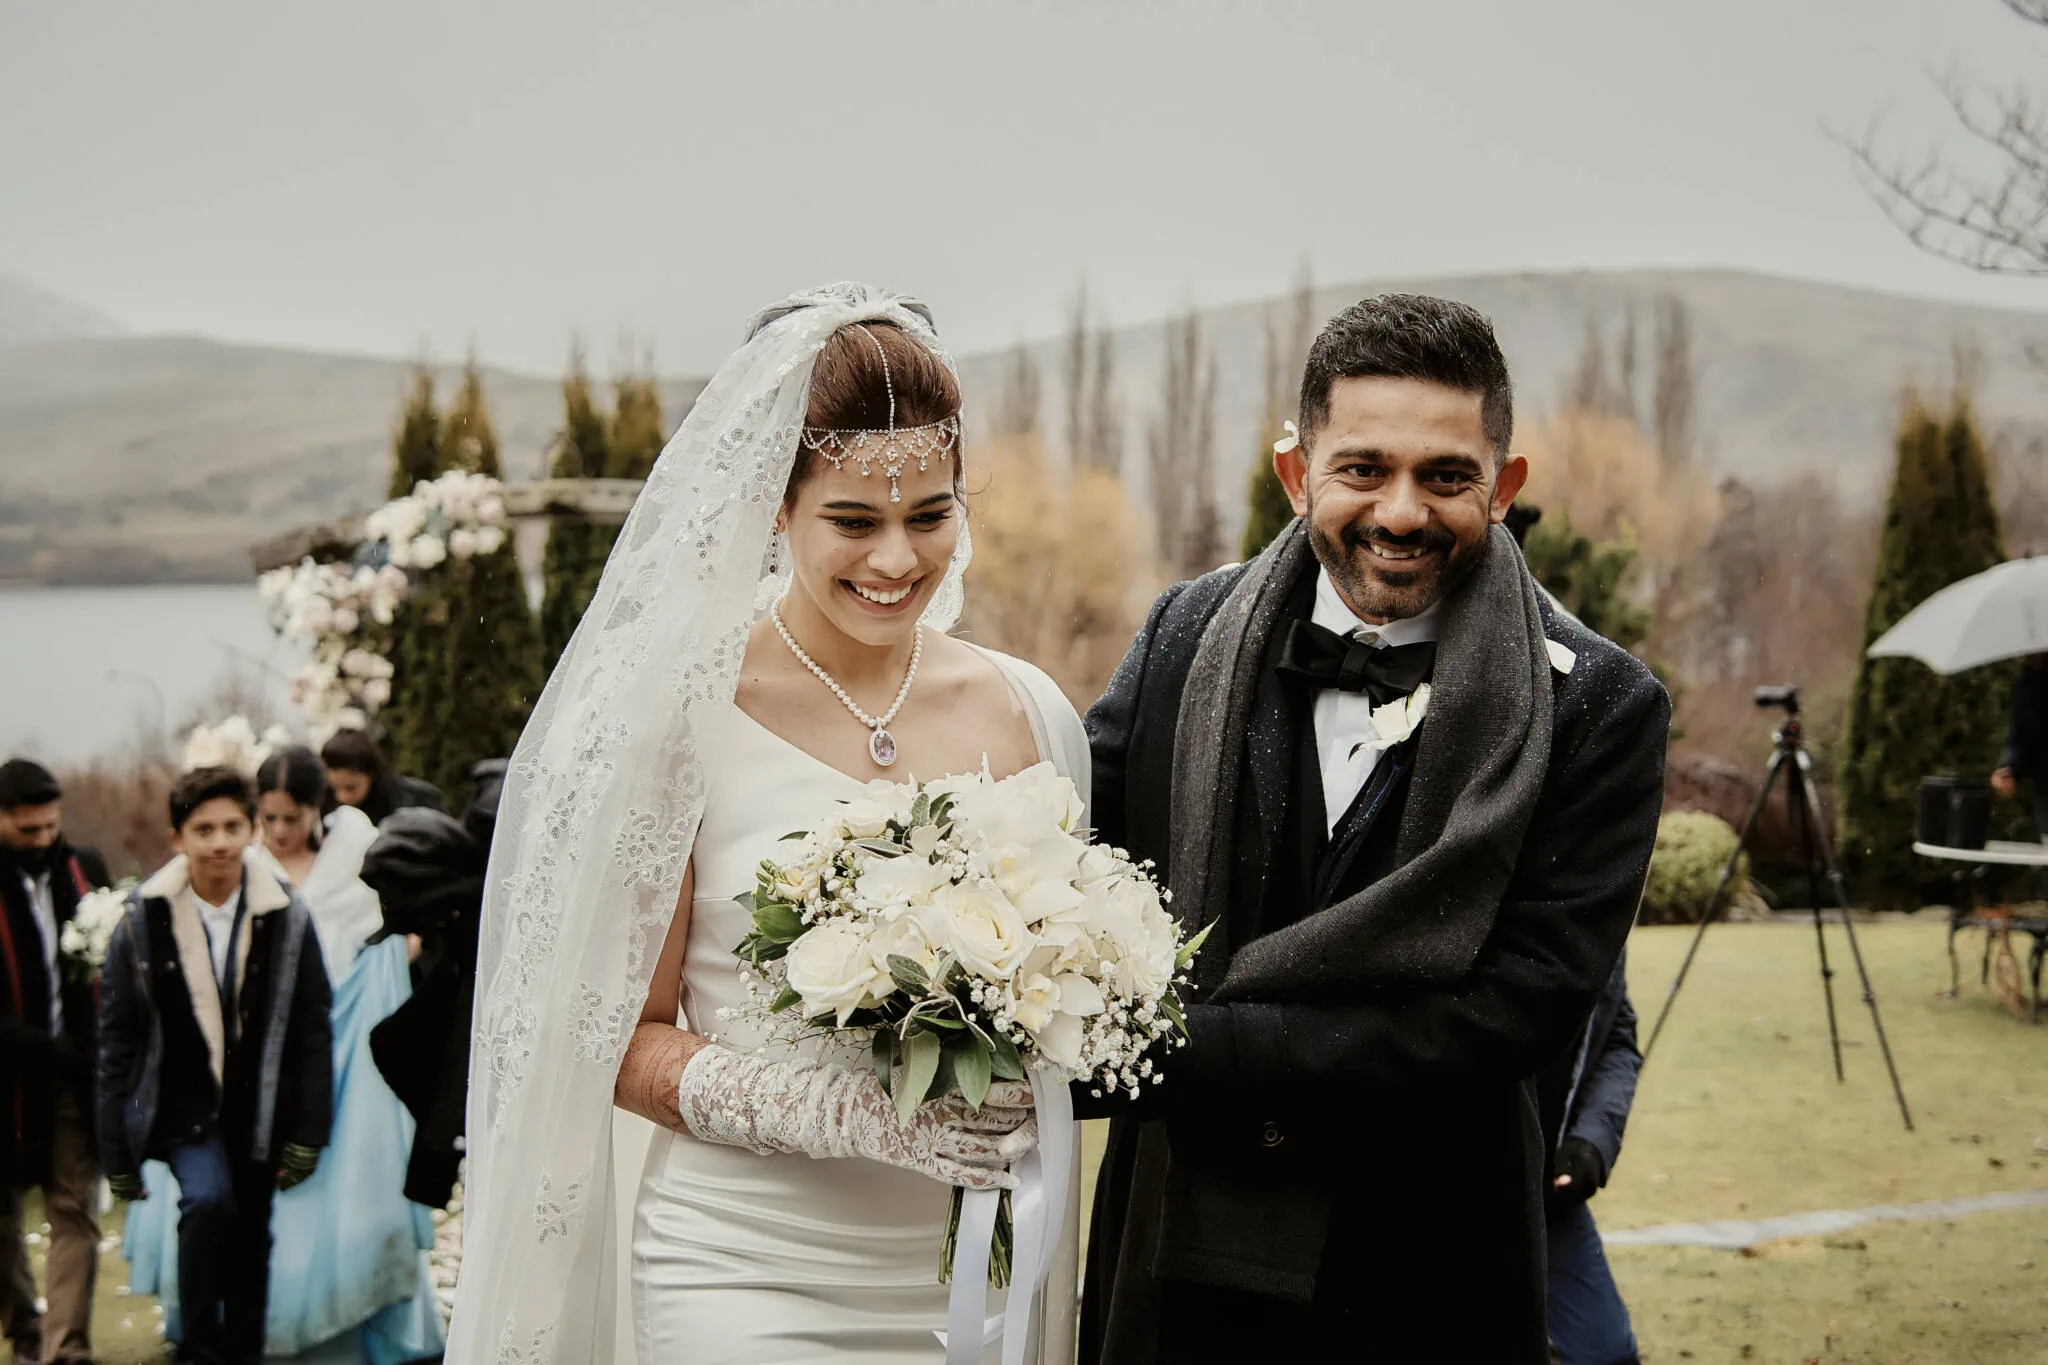 Queenstown New Zealand Elopement Wedding Photographer - Keywords: Queenstown Islamic Wedding

Description: Wasim and Yumn celebrate their Islamic wedding as they walk down the aisle in Queenstown.